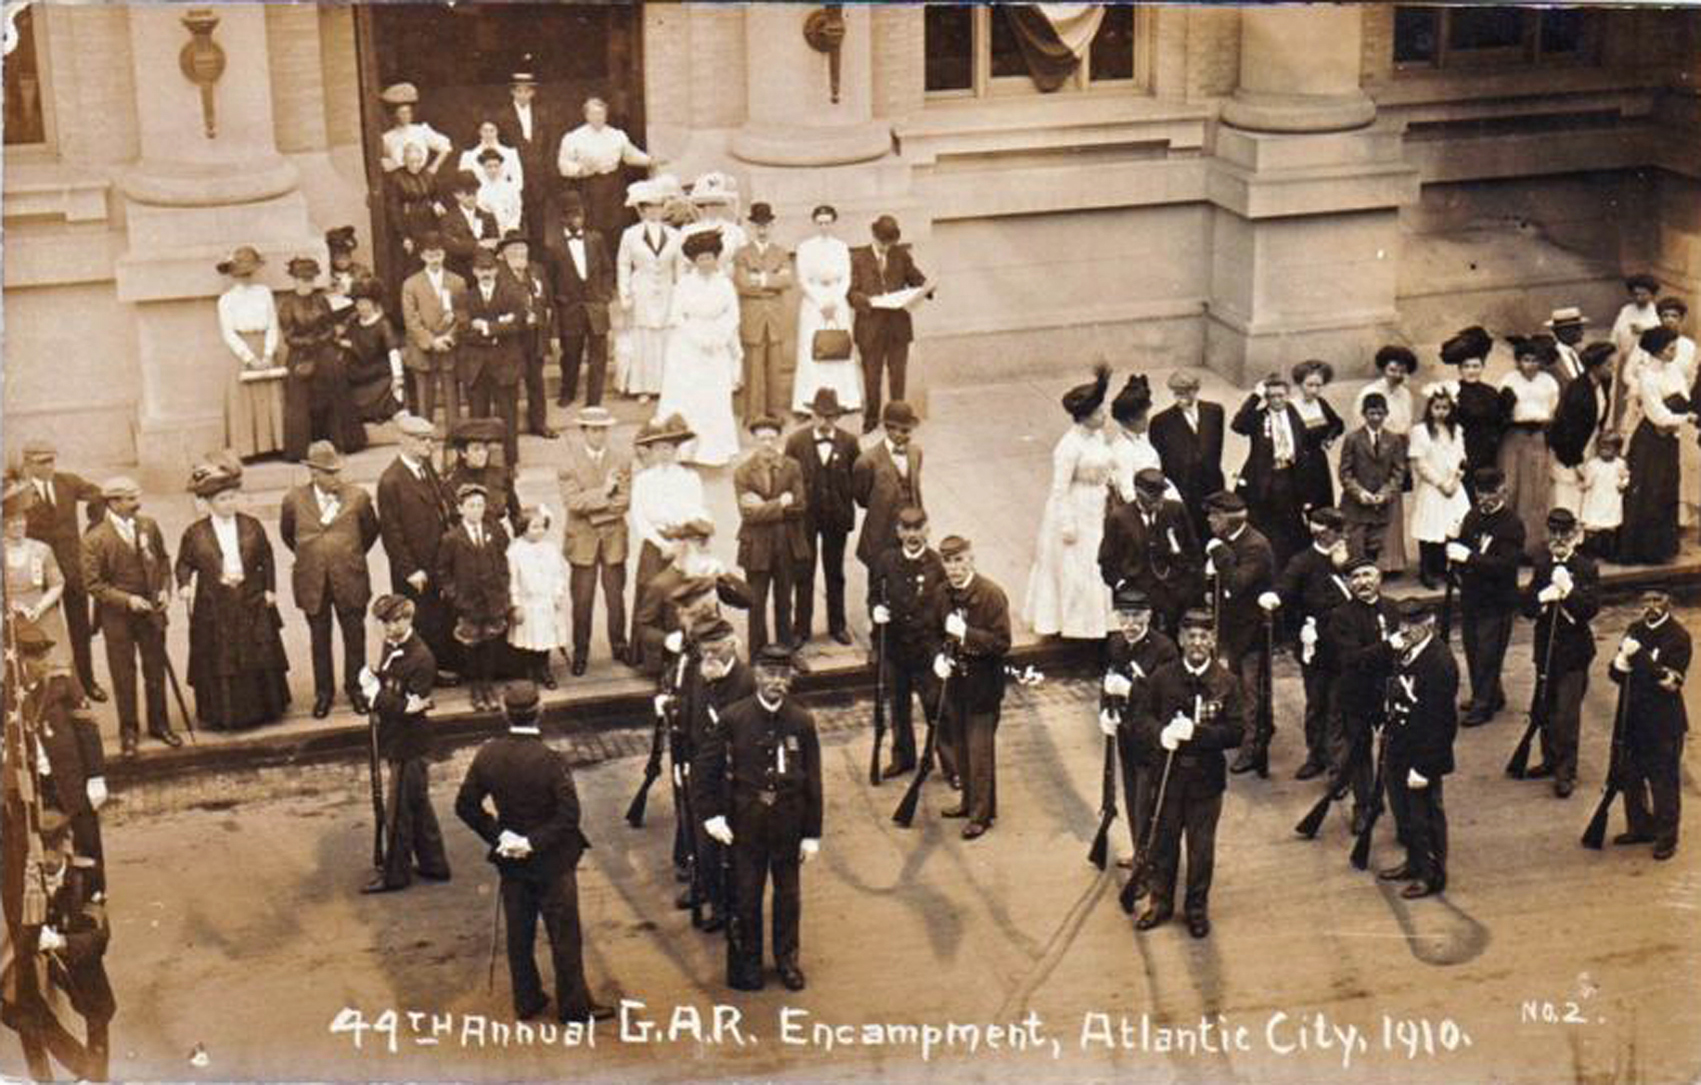 Atlantic City - 49th annual GAR encampment - 1910